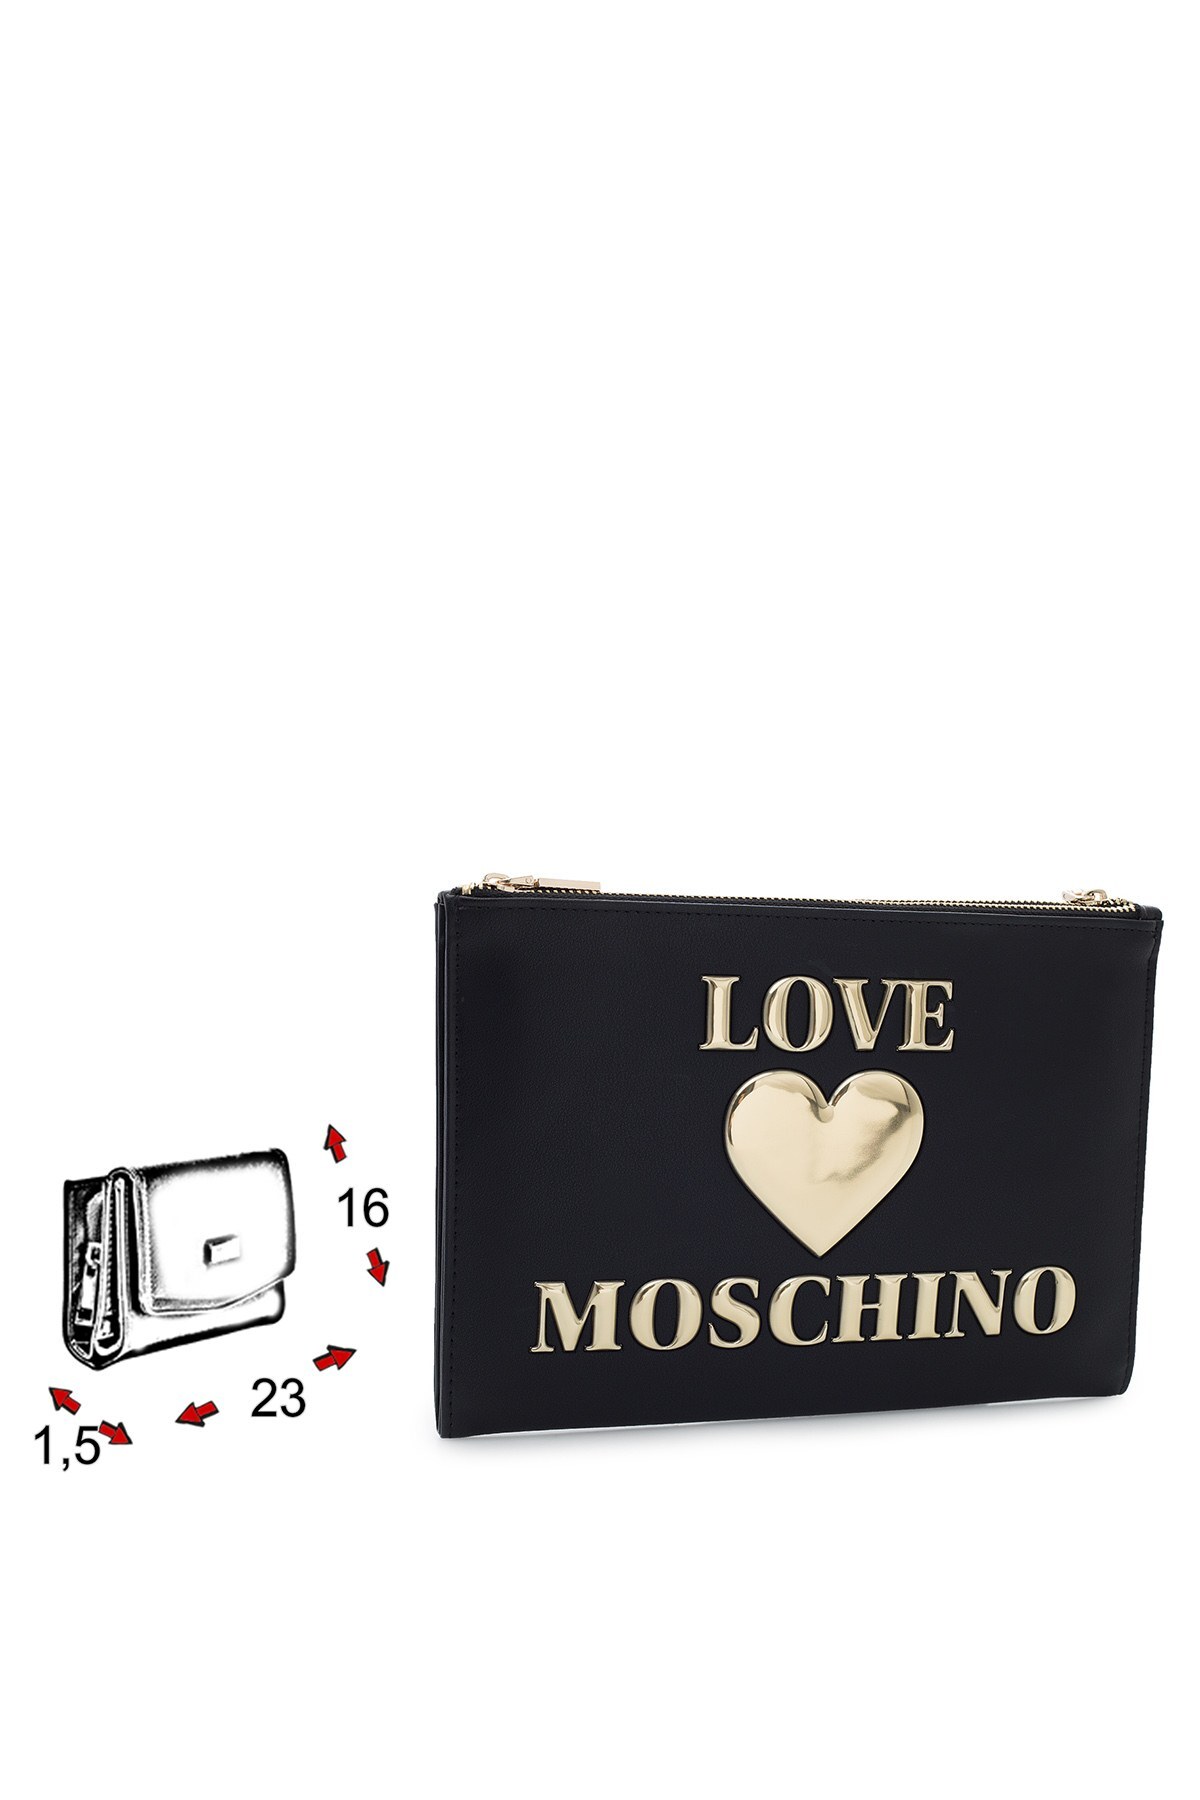 Love Moschino Logo Baskılı Bayan Çanta JC5615PP1BLE0000 SİYAH